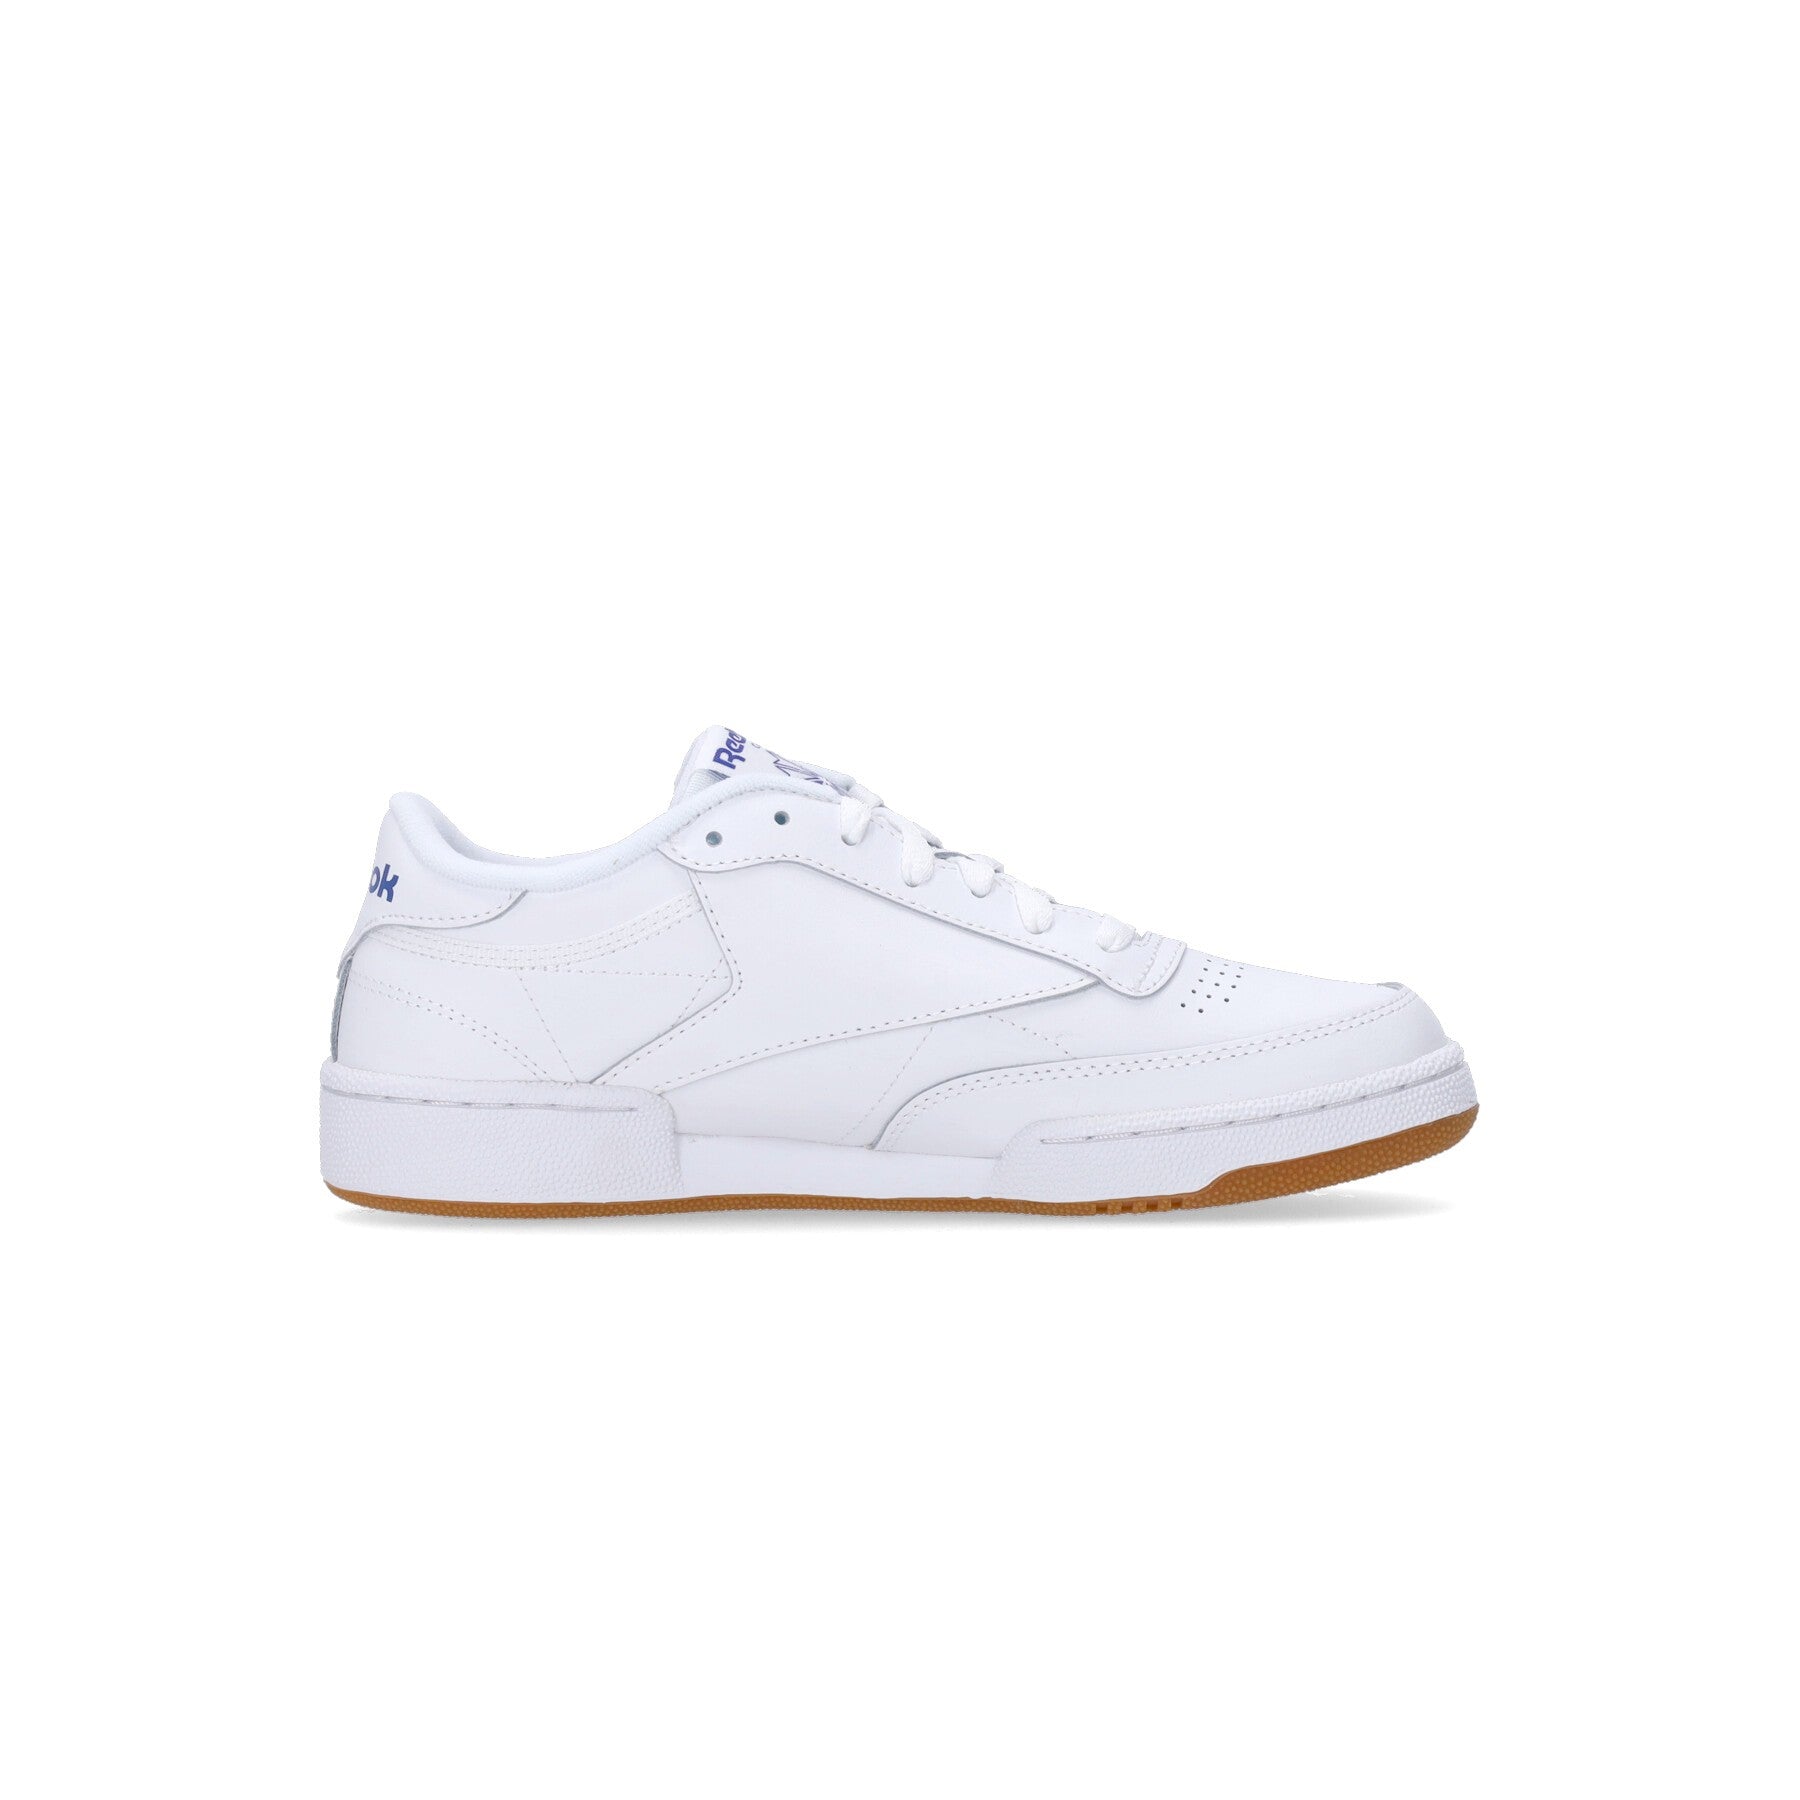 Low Men's Shoe Club C 85 White/royal/gum